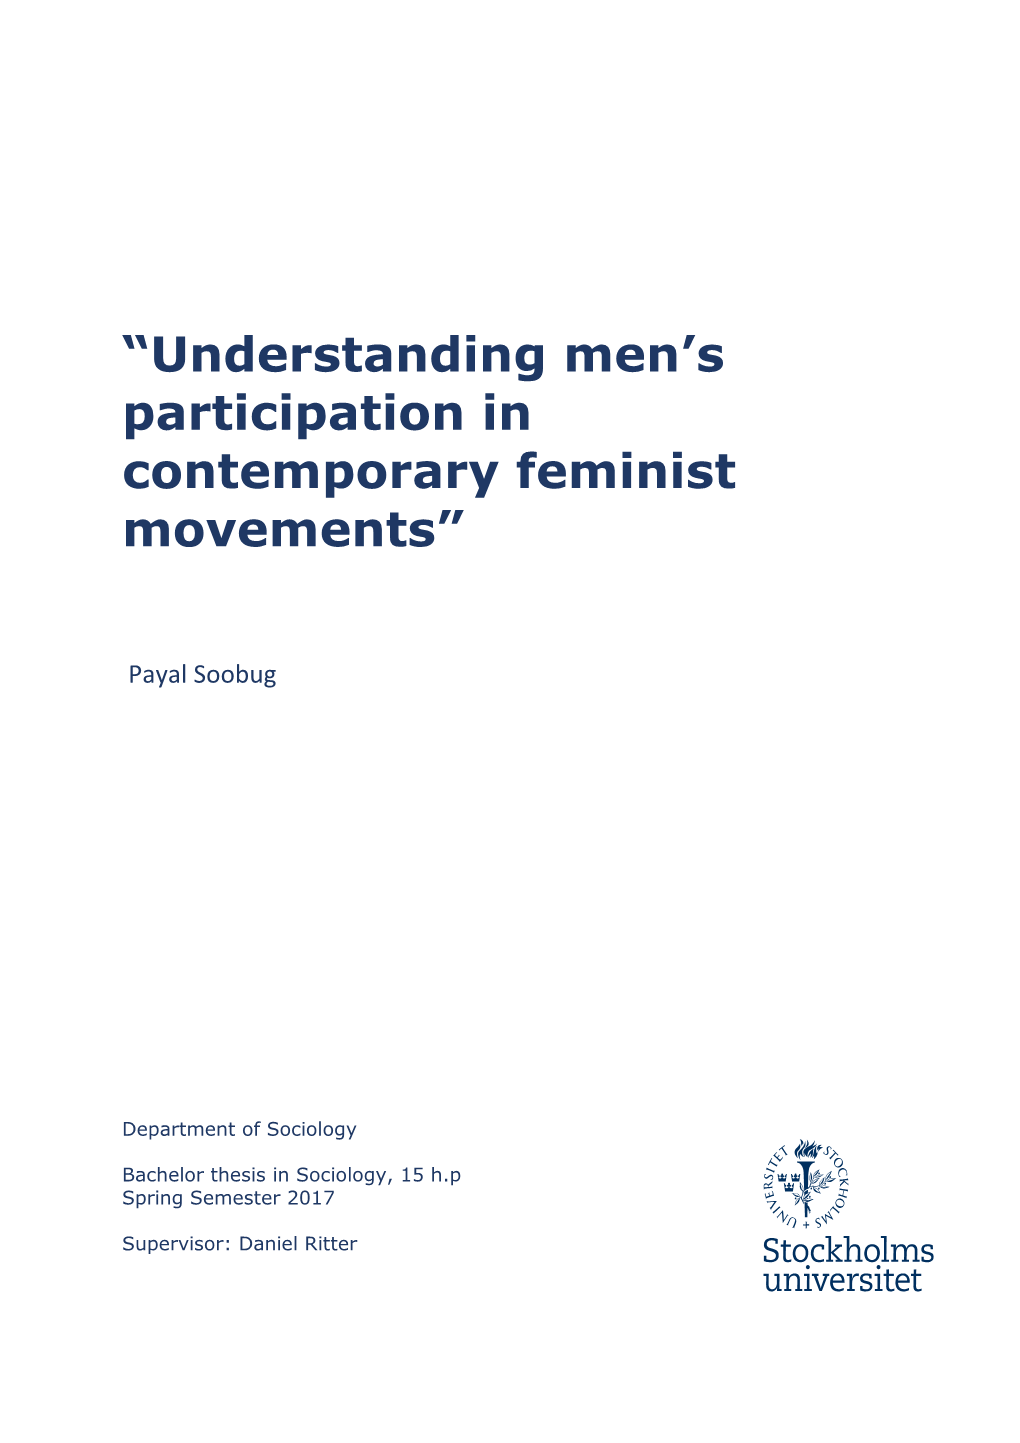 “Understanding Men's Participation in Contemporary Feminist Movements”